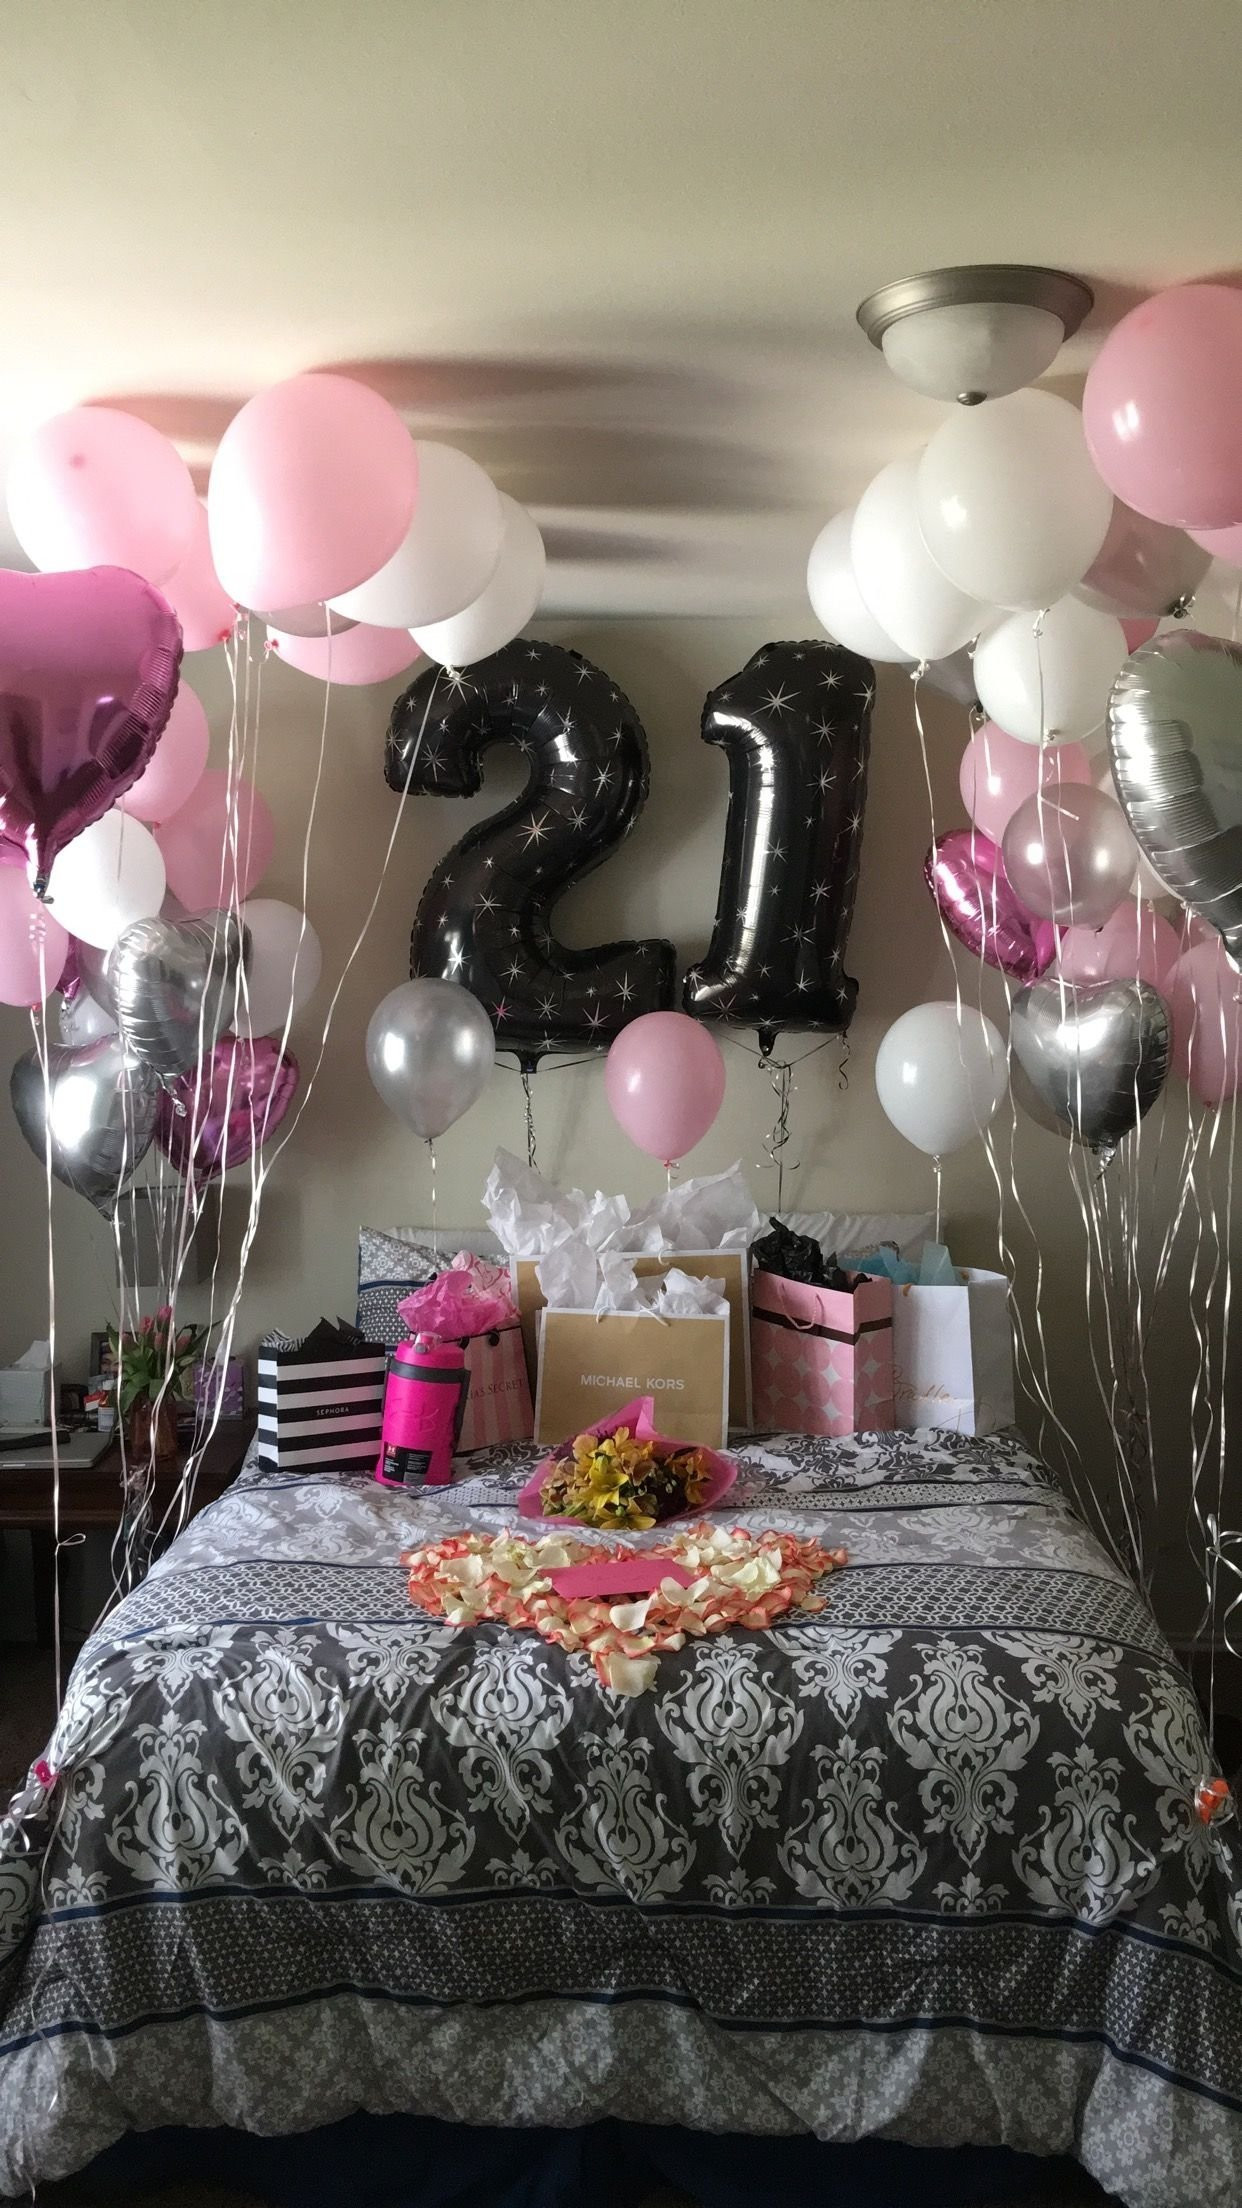 Gift Ideas For Girlfriend Anniversary
 10 Fashionable Birthday Surprise Ideas For Girlfriend 2020